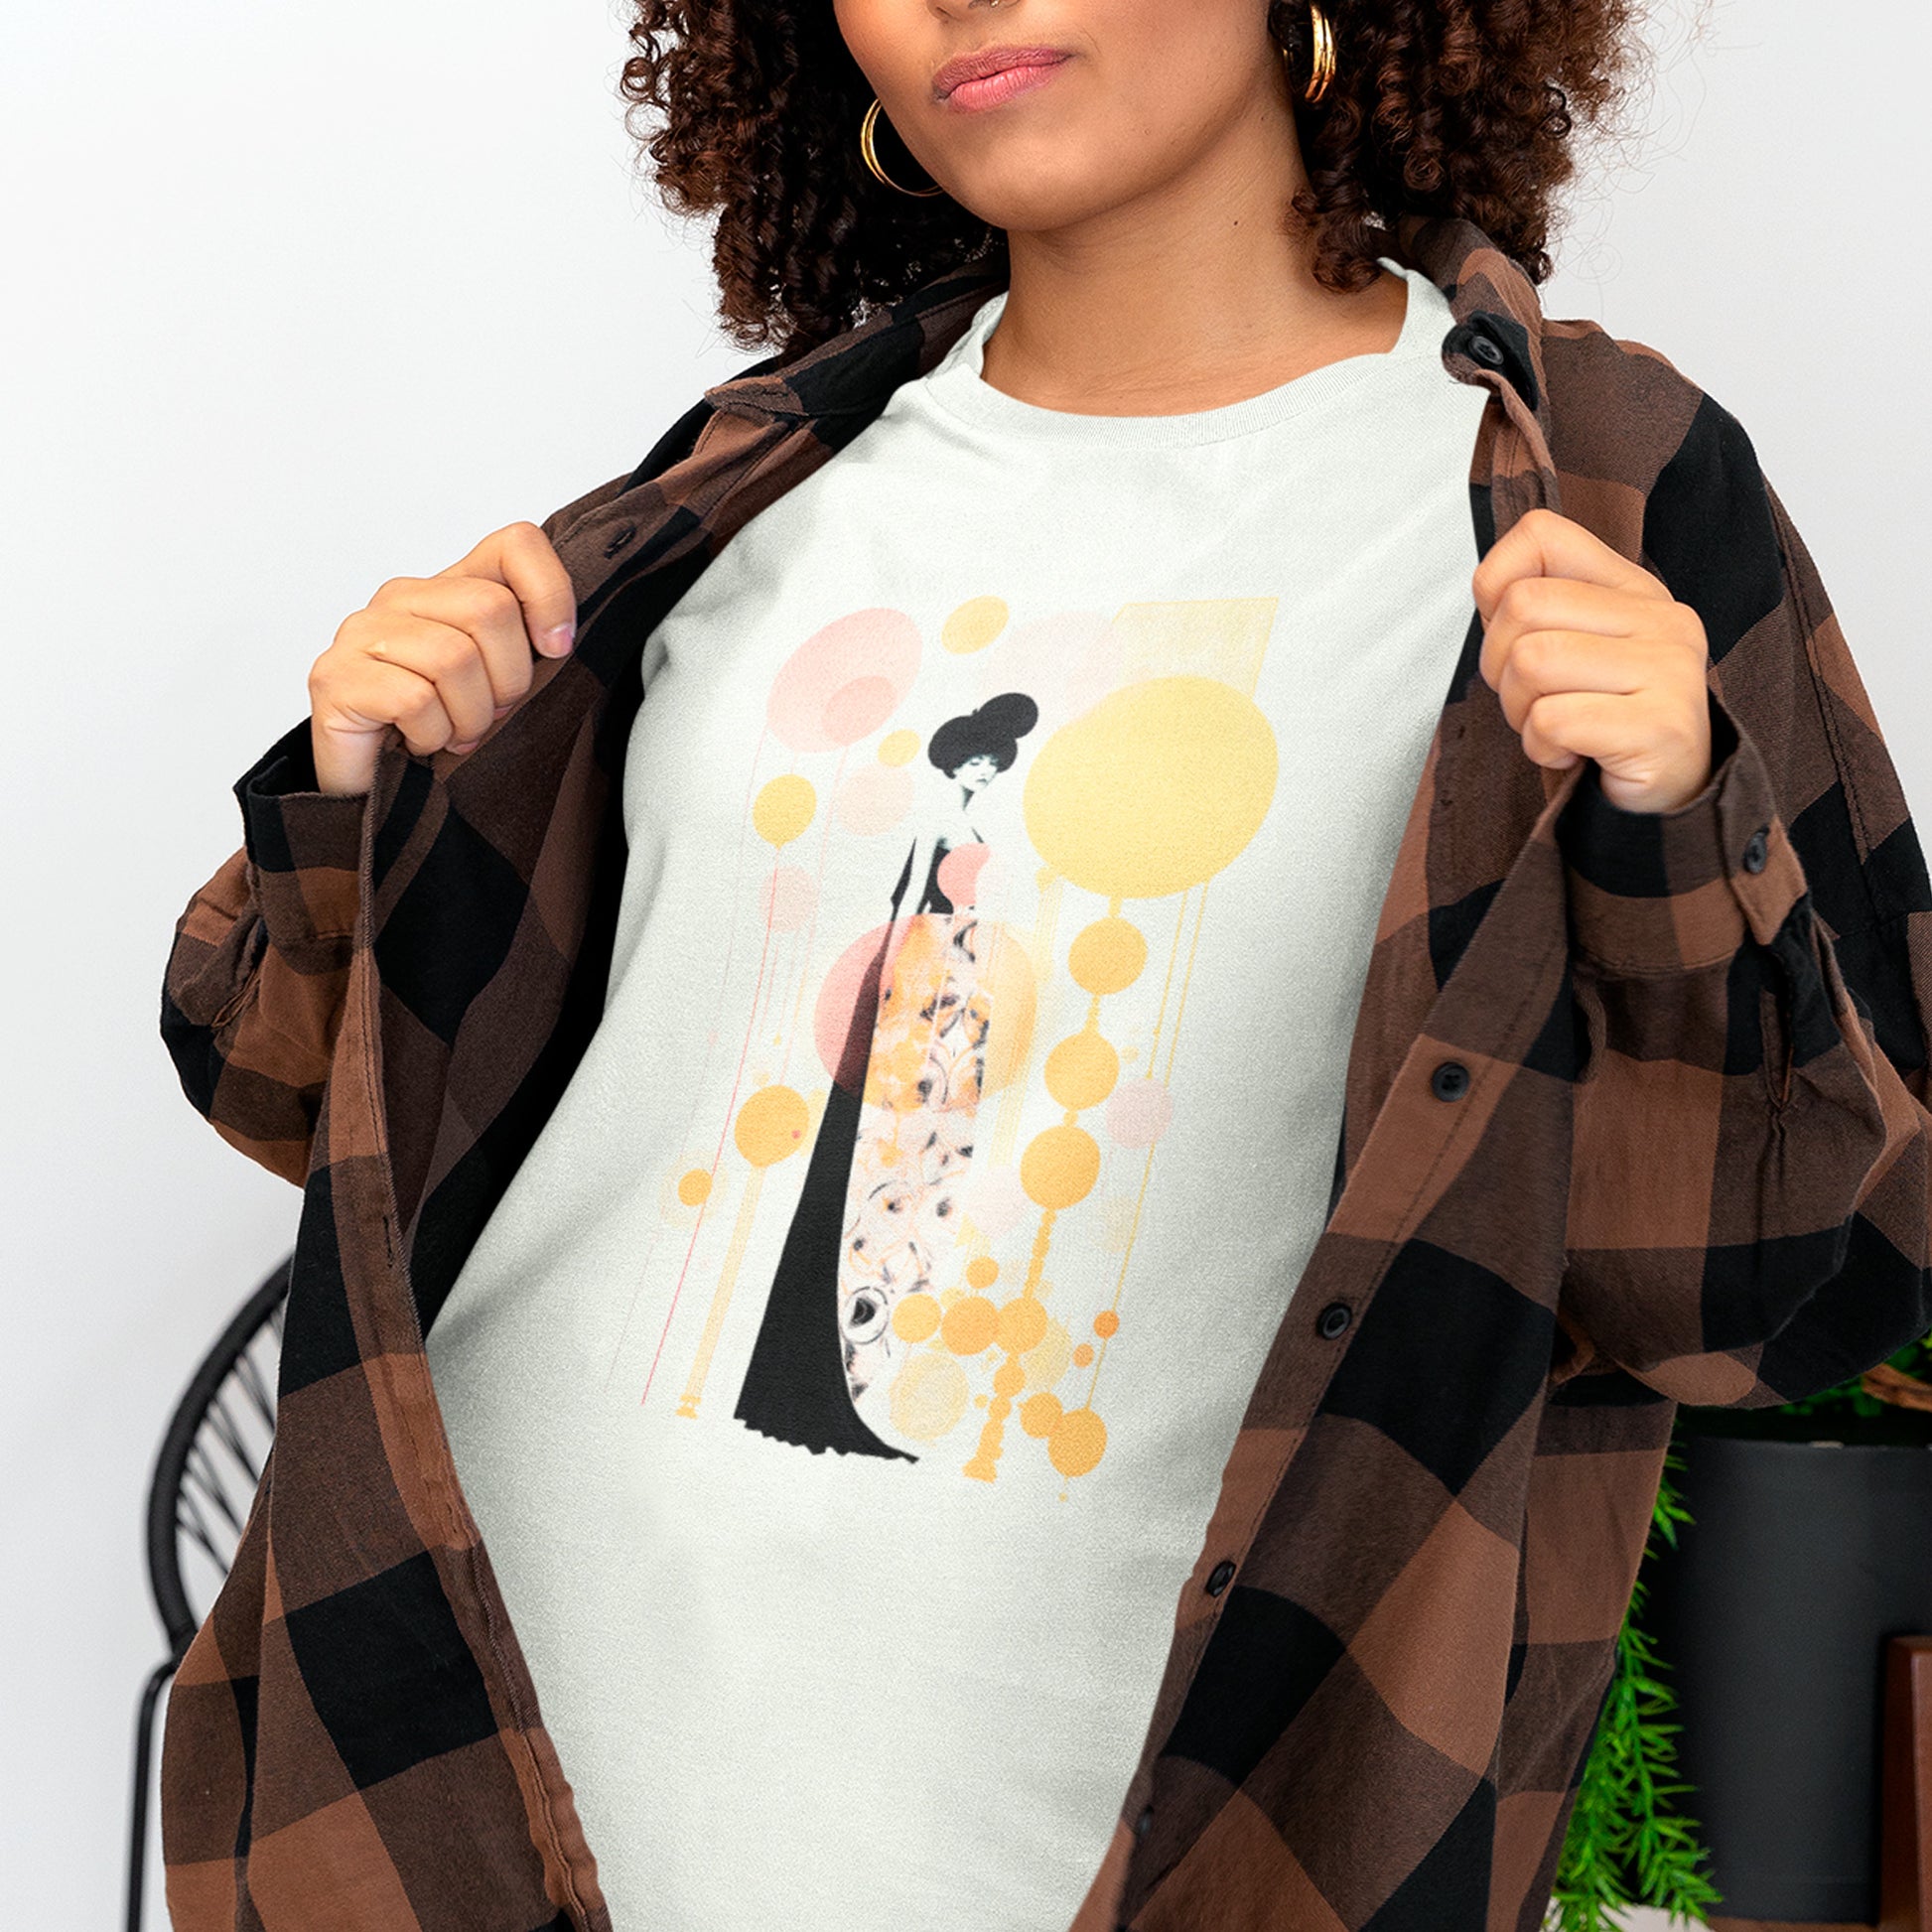  Pudica Slender Unisex T-Shirt worn by female model- Ash